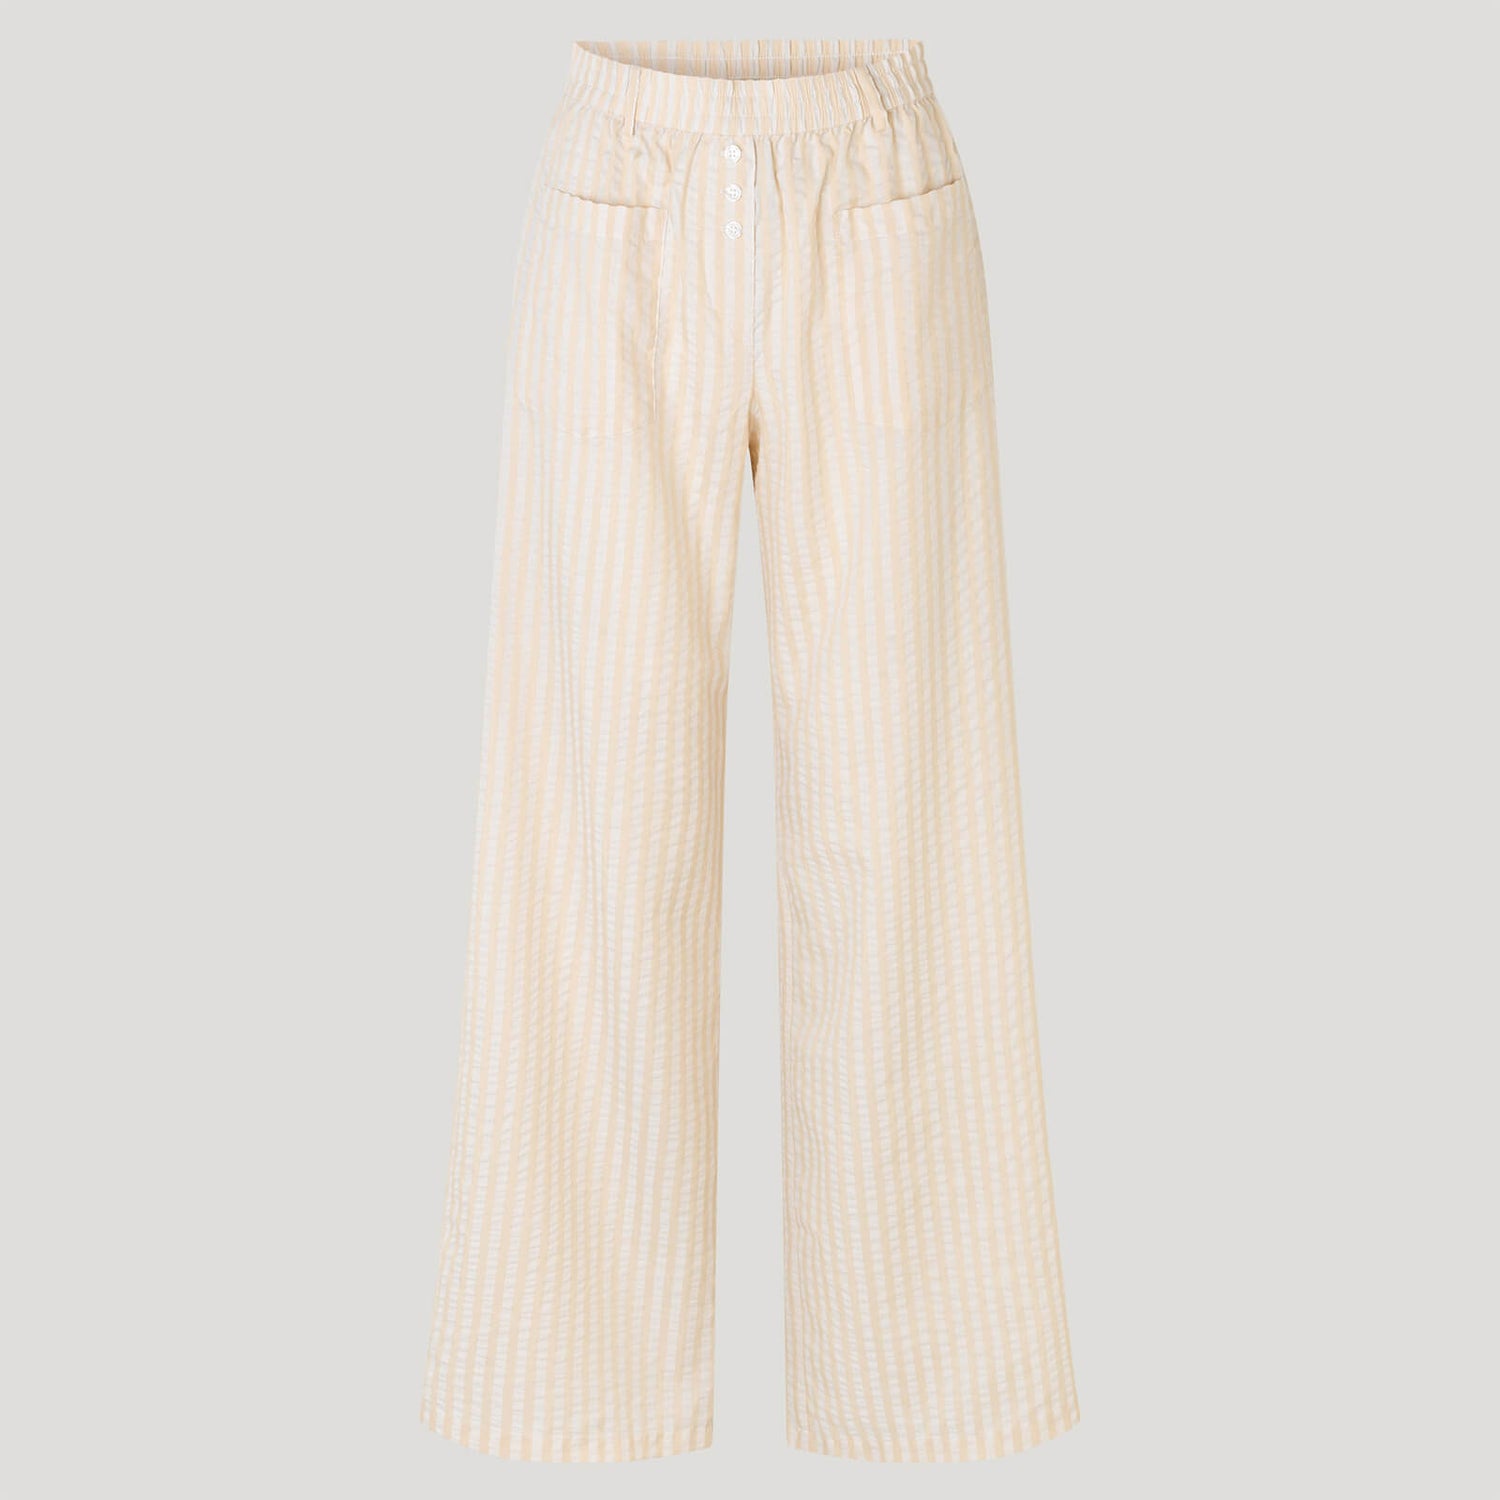 Baum Und Pferdgarten Women's Nibal Trousers - White Crème Stripe - EU 34/UK 6